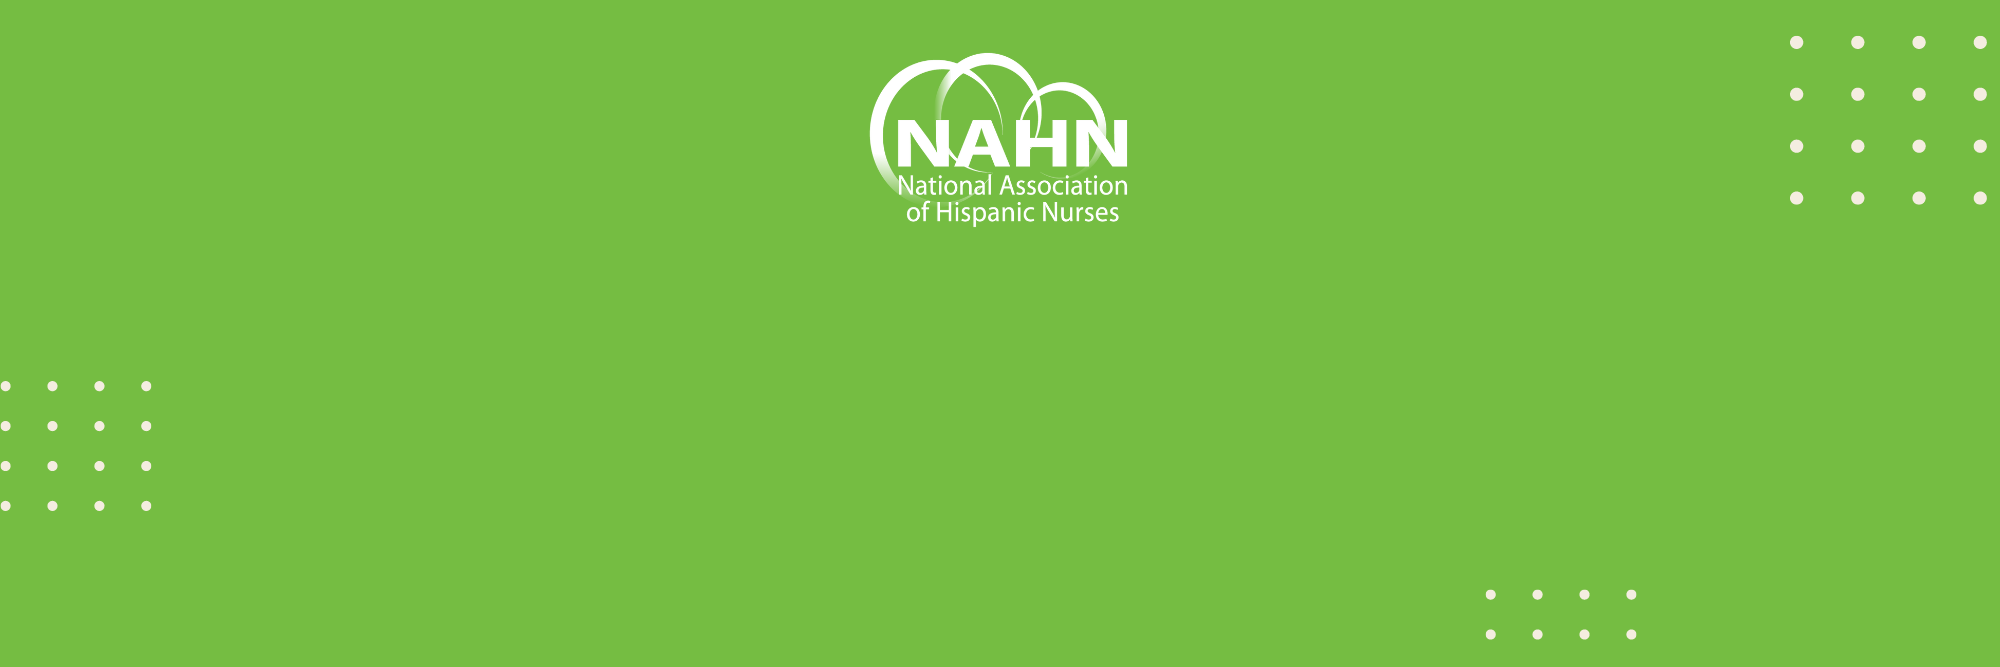 Learn with NAHN through Virtual Programs